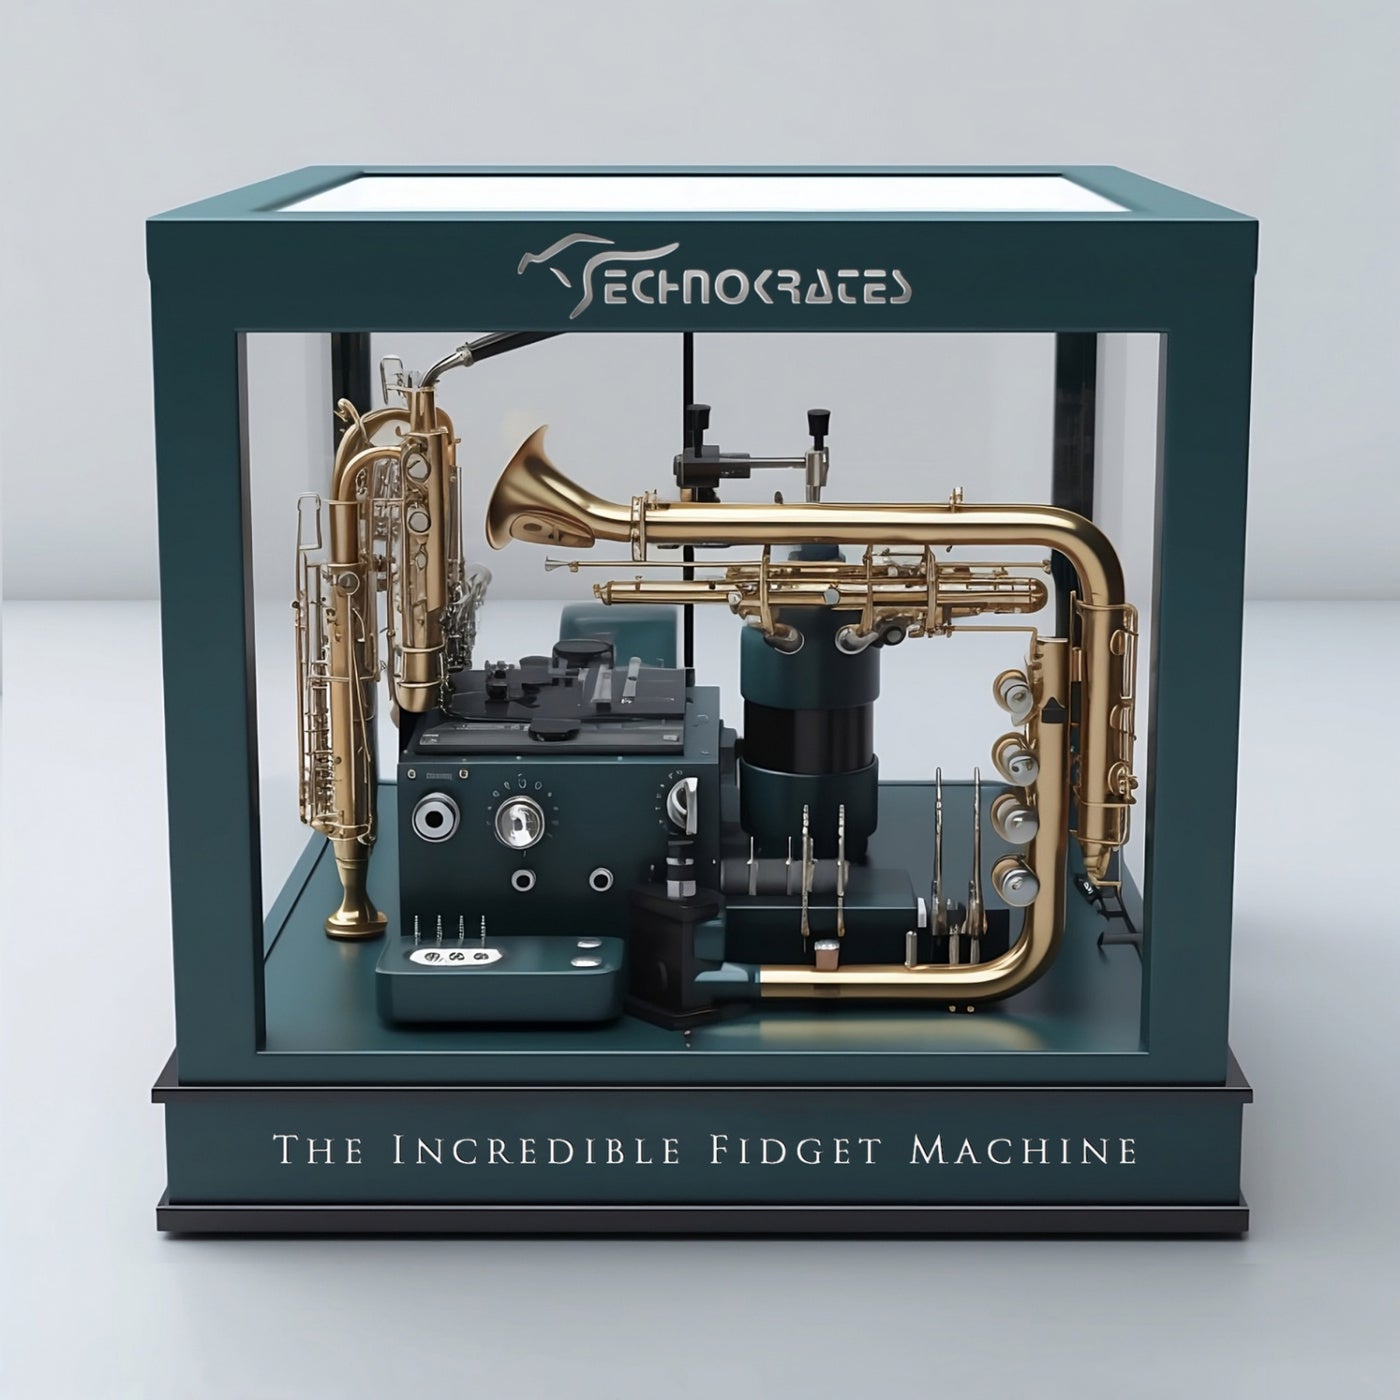 The Incredible Fidget Machine